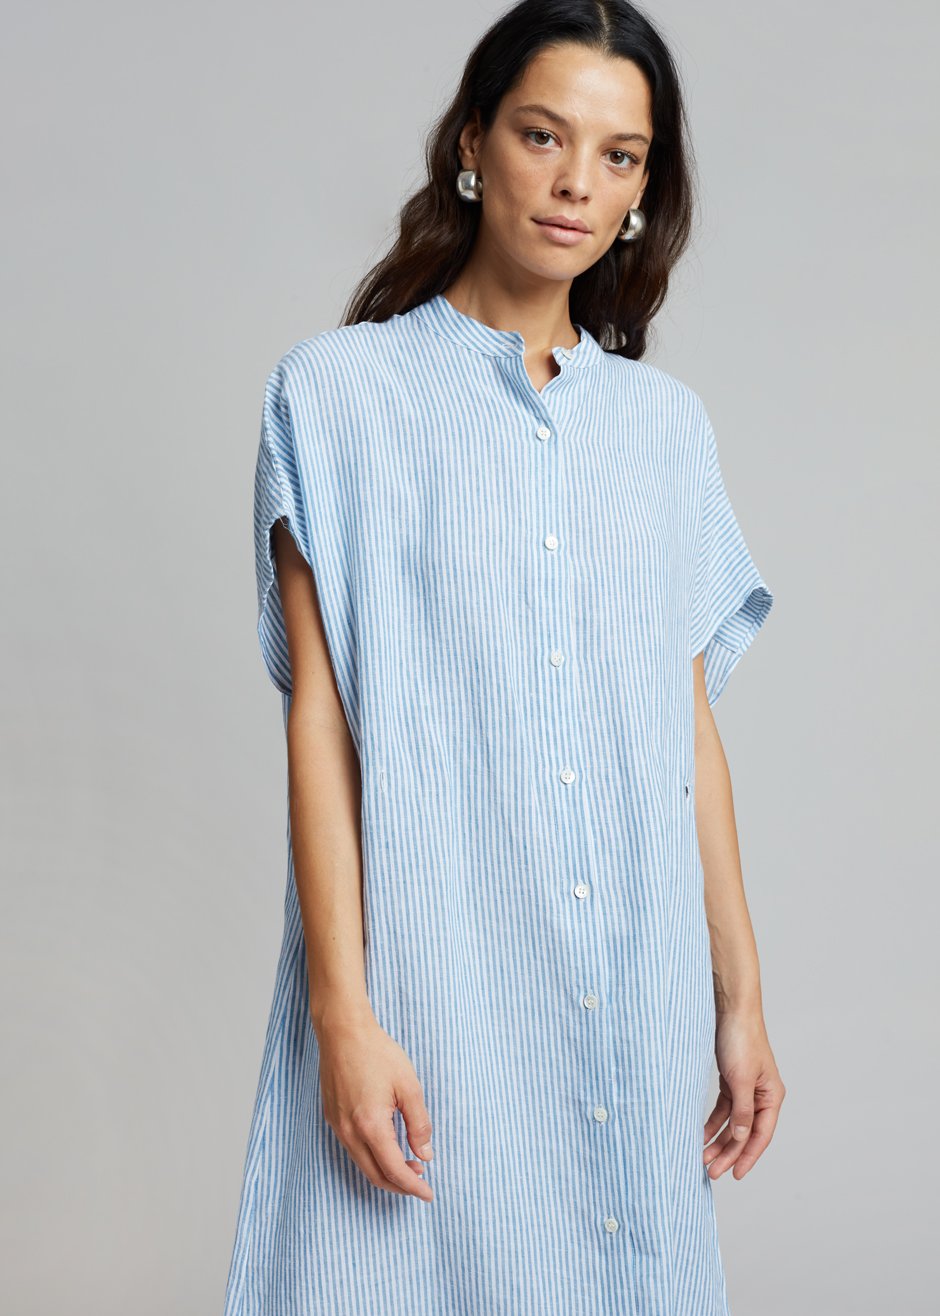 Malin Shirt Dress - Blue/White Stripe - 1